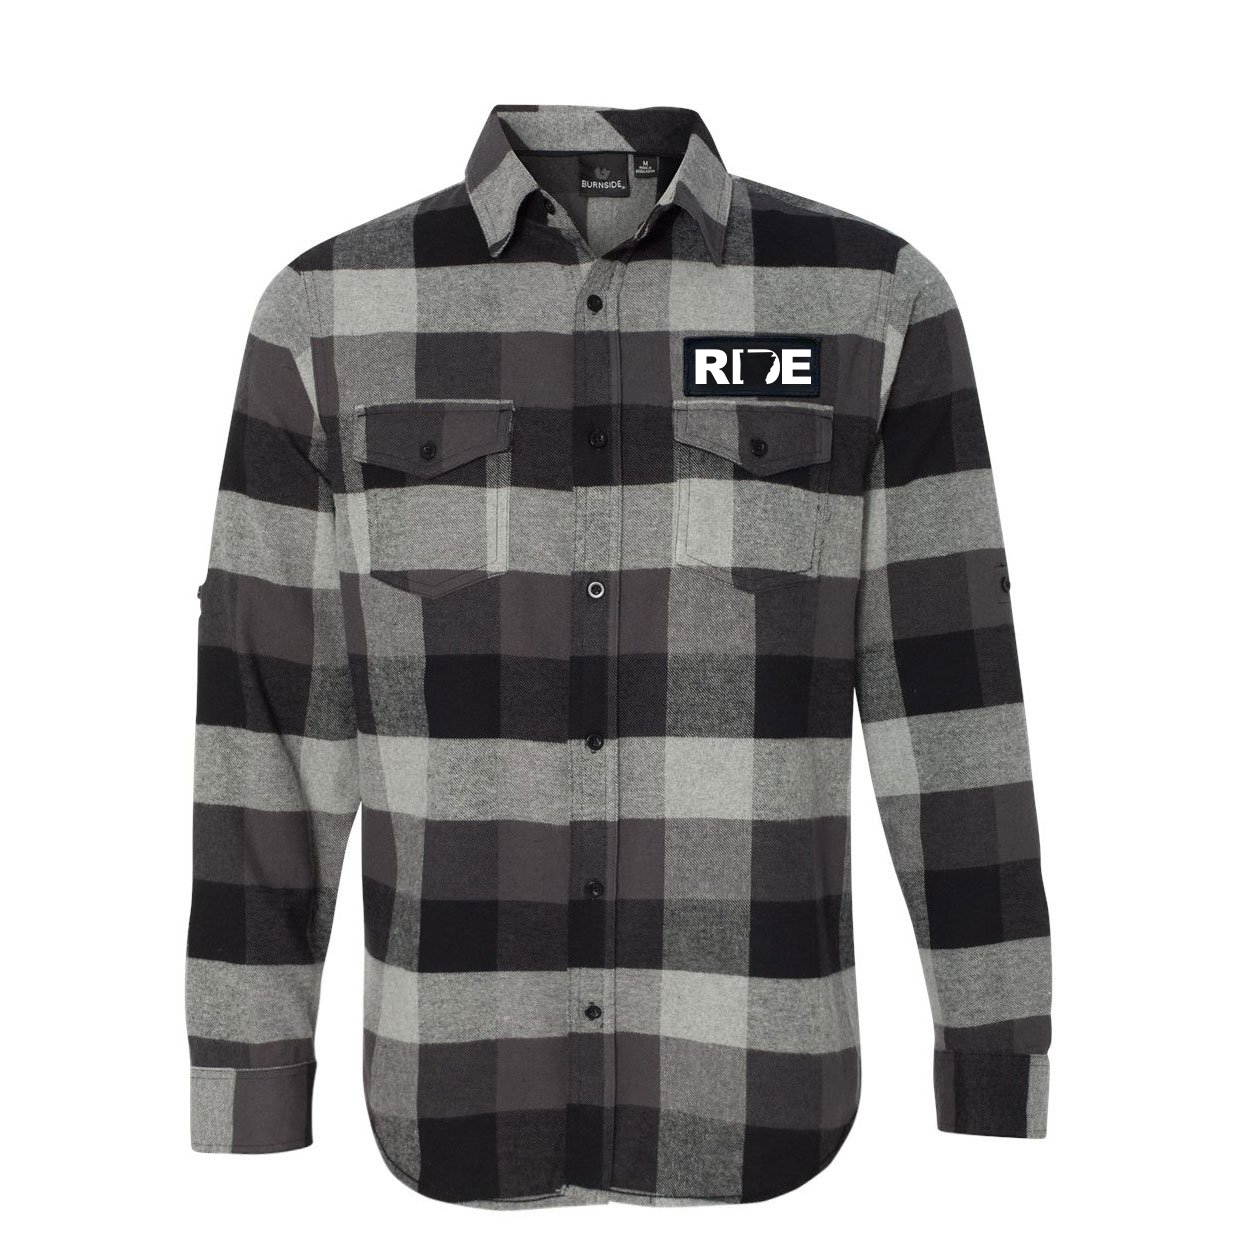 Ride Arkansas Classic Unisex Long Sleeve Woven Patch Flannel Shirt Black/Gray (White Logo)